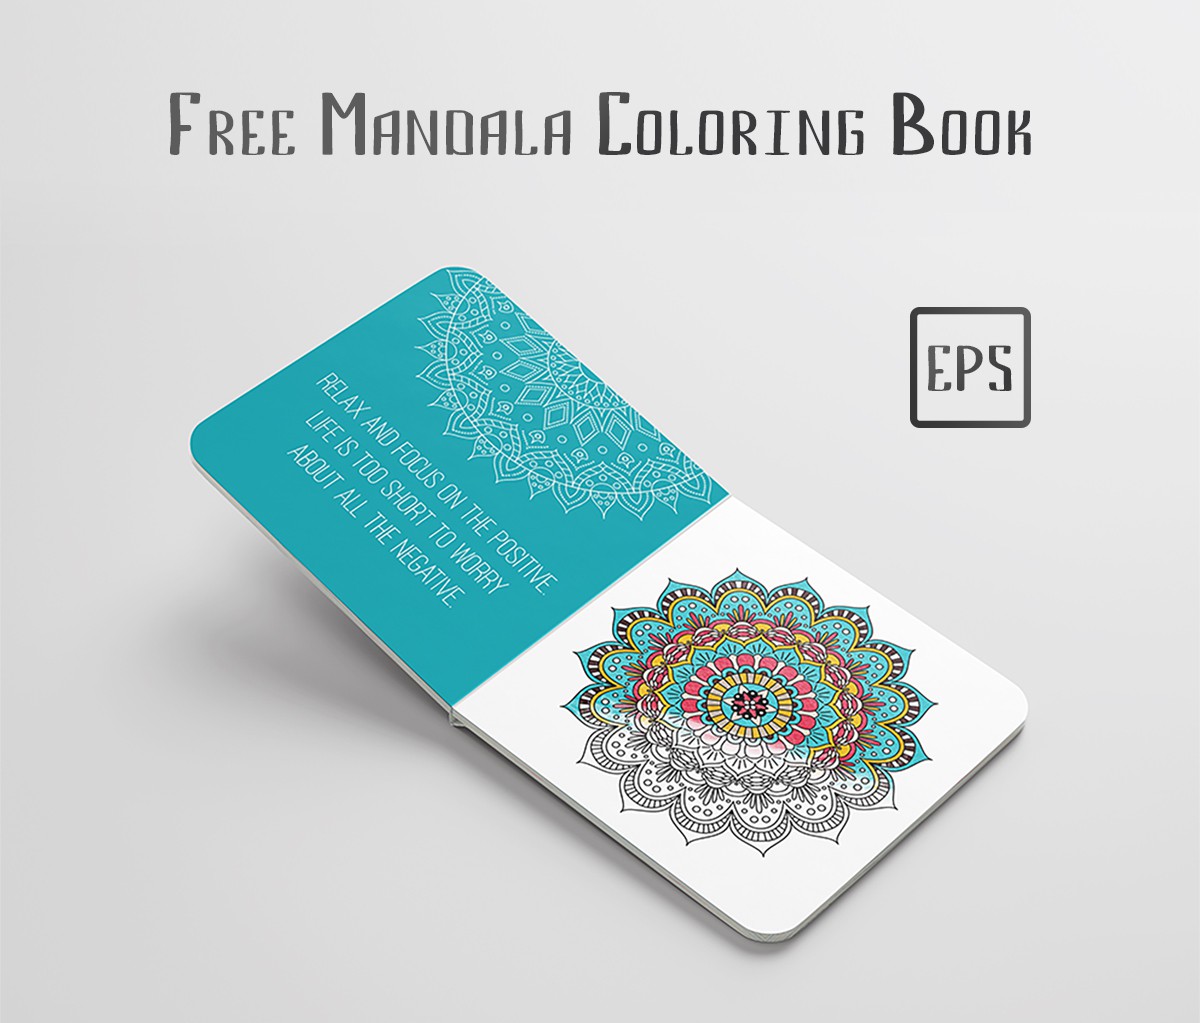 Free Mandala Coloring Book EPS vector скачать бесплатно